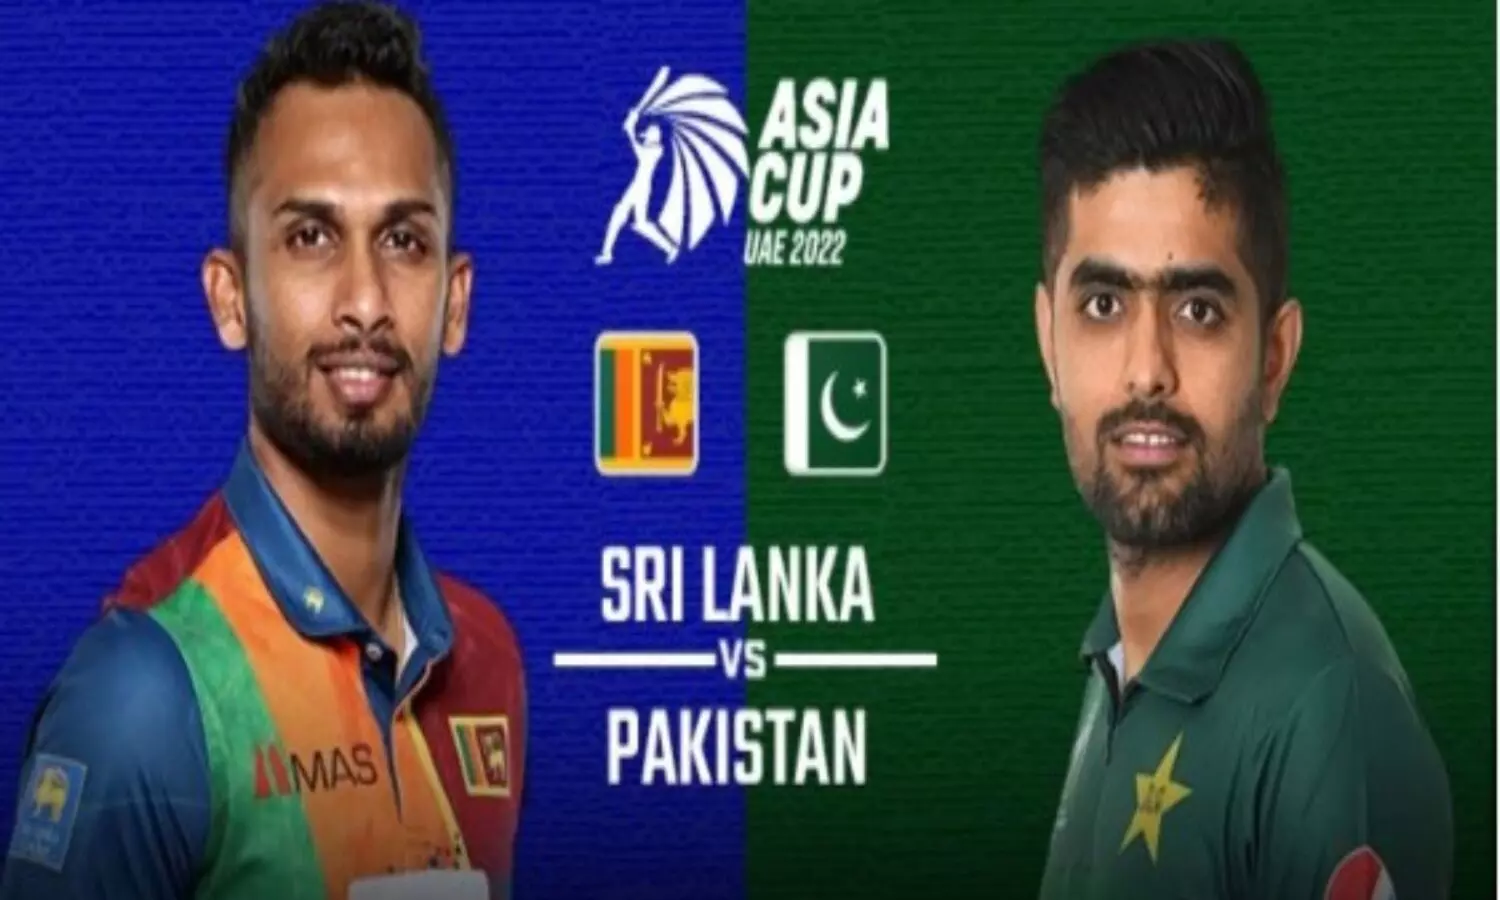 Asia Cup 2022 Sri Lanka and Pakistan